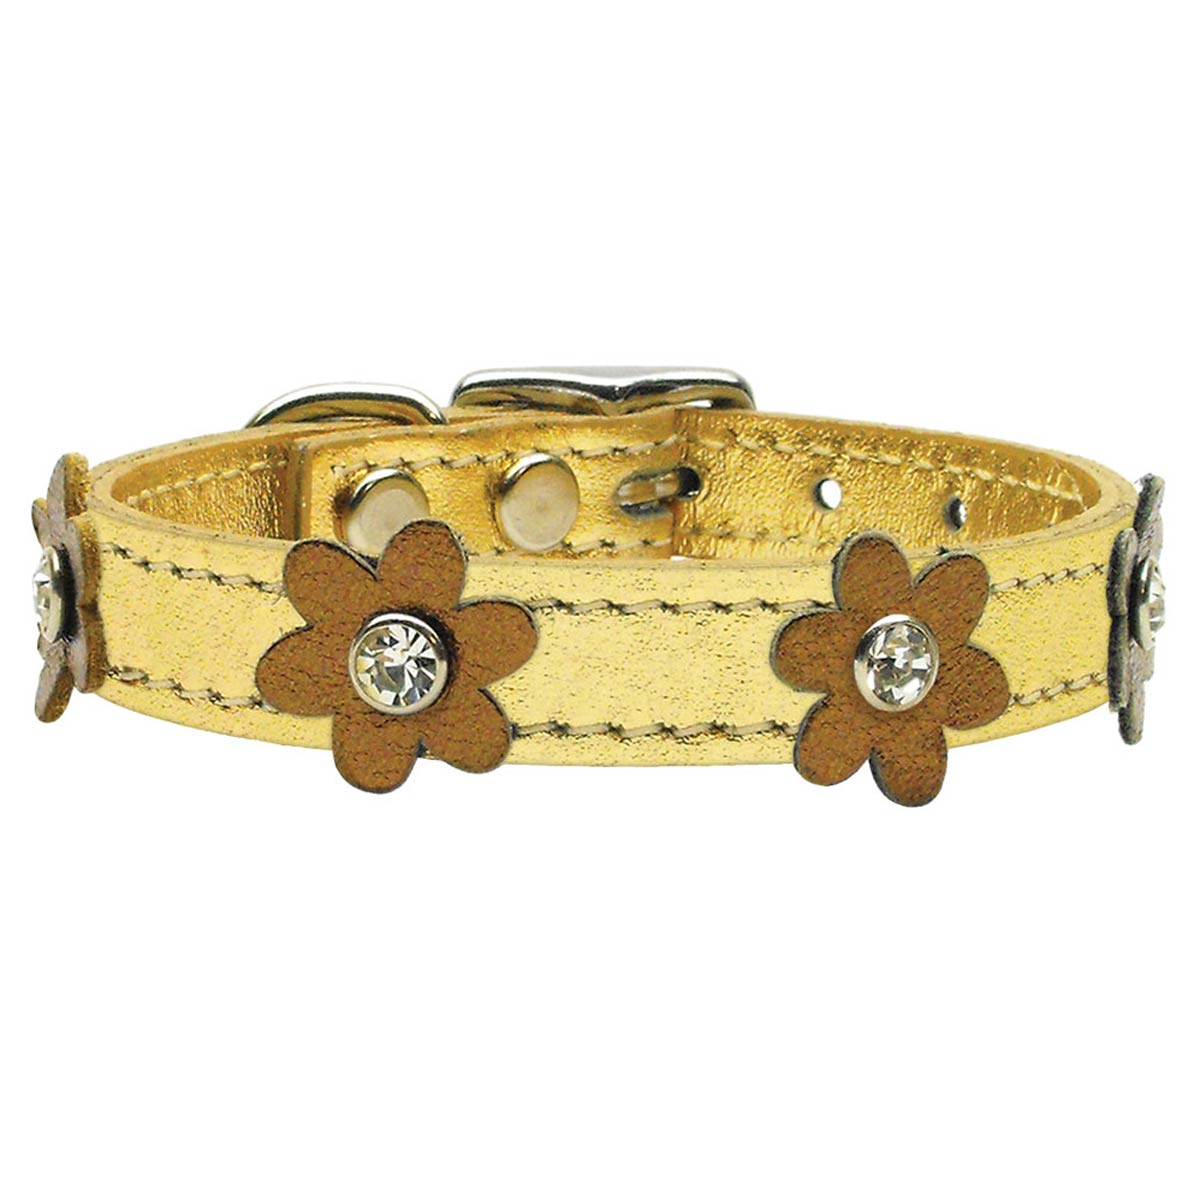 Flower Gold Leather Dog Collar - Bronze Flowers